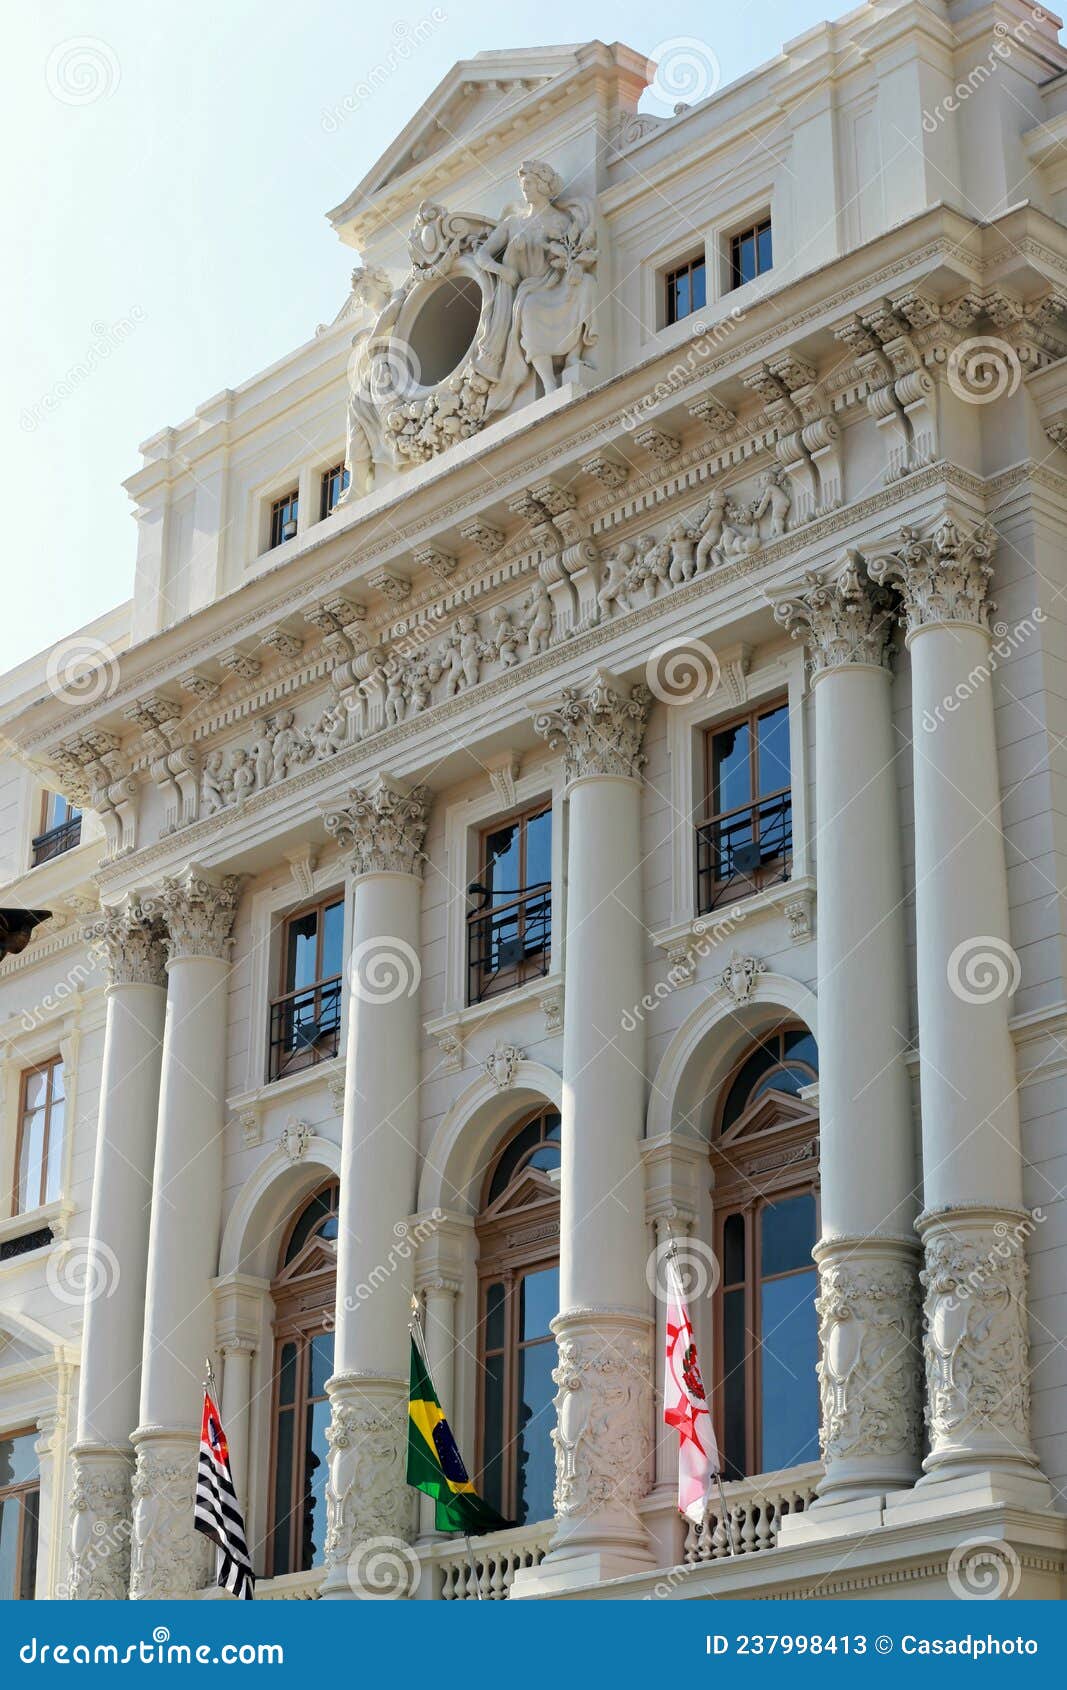 facade of historic building of secretary of justice of sao paulo